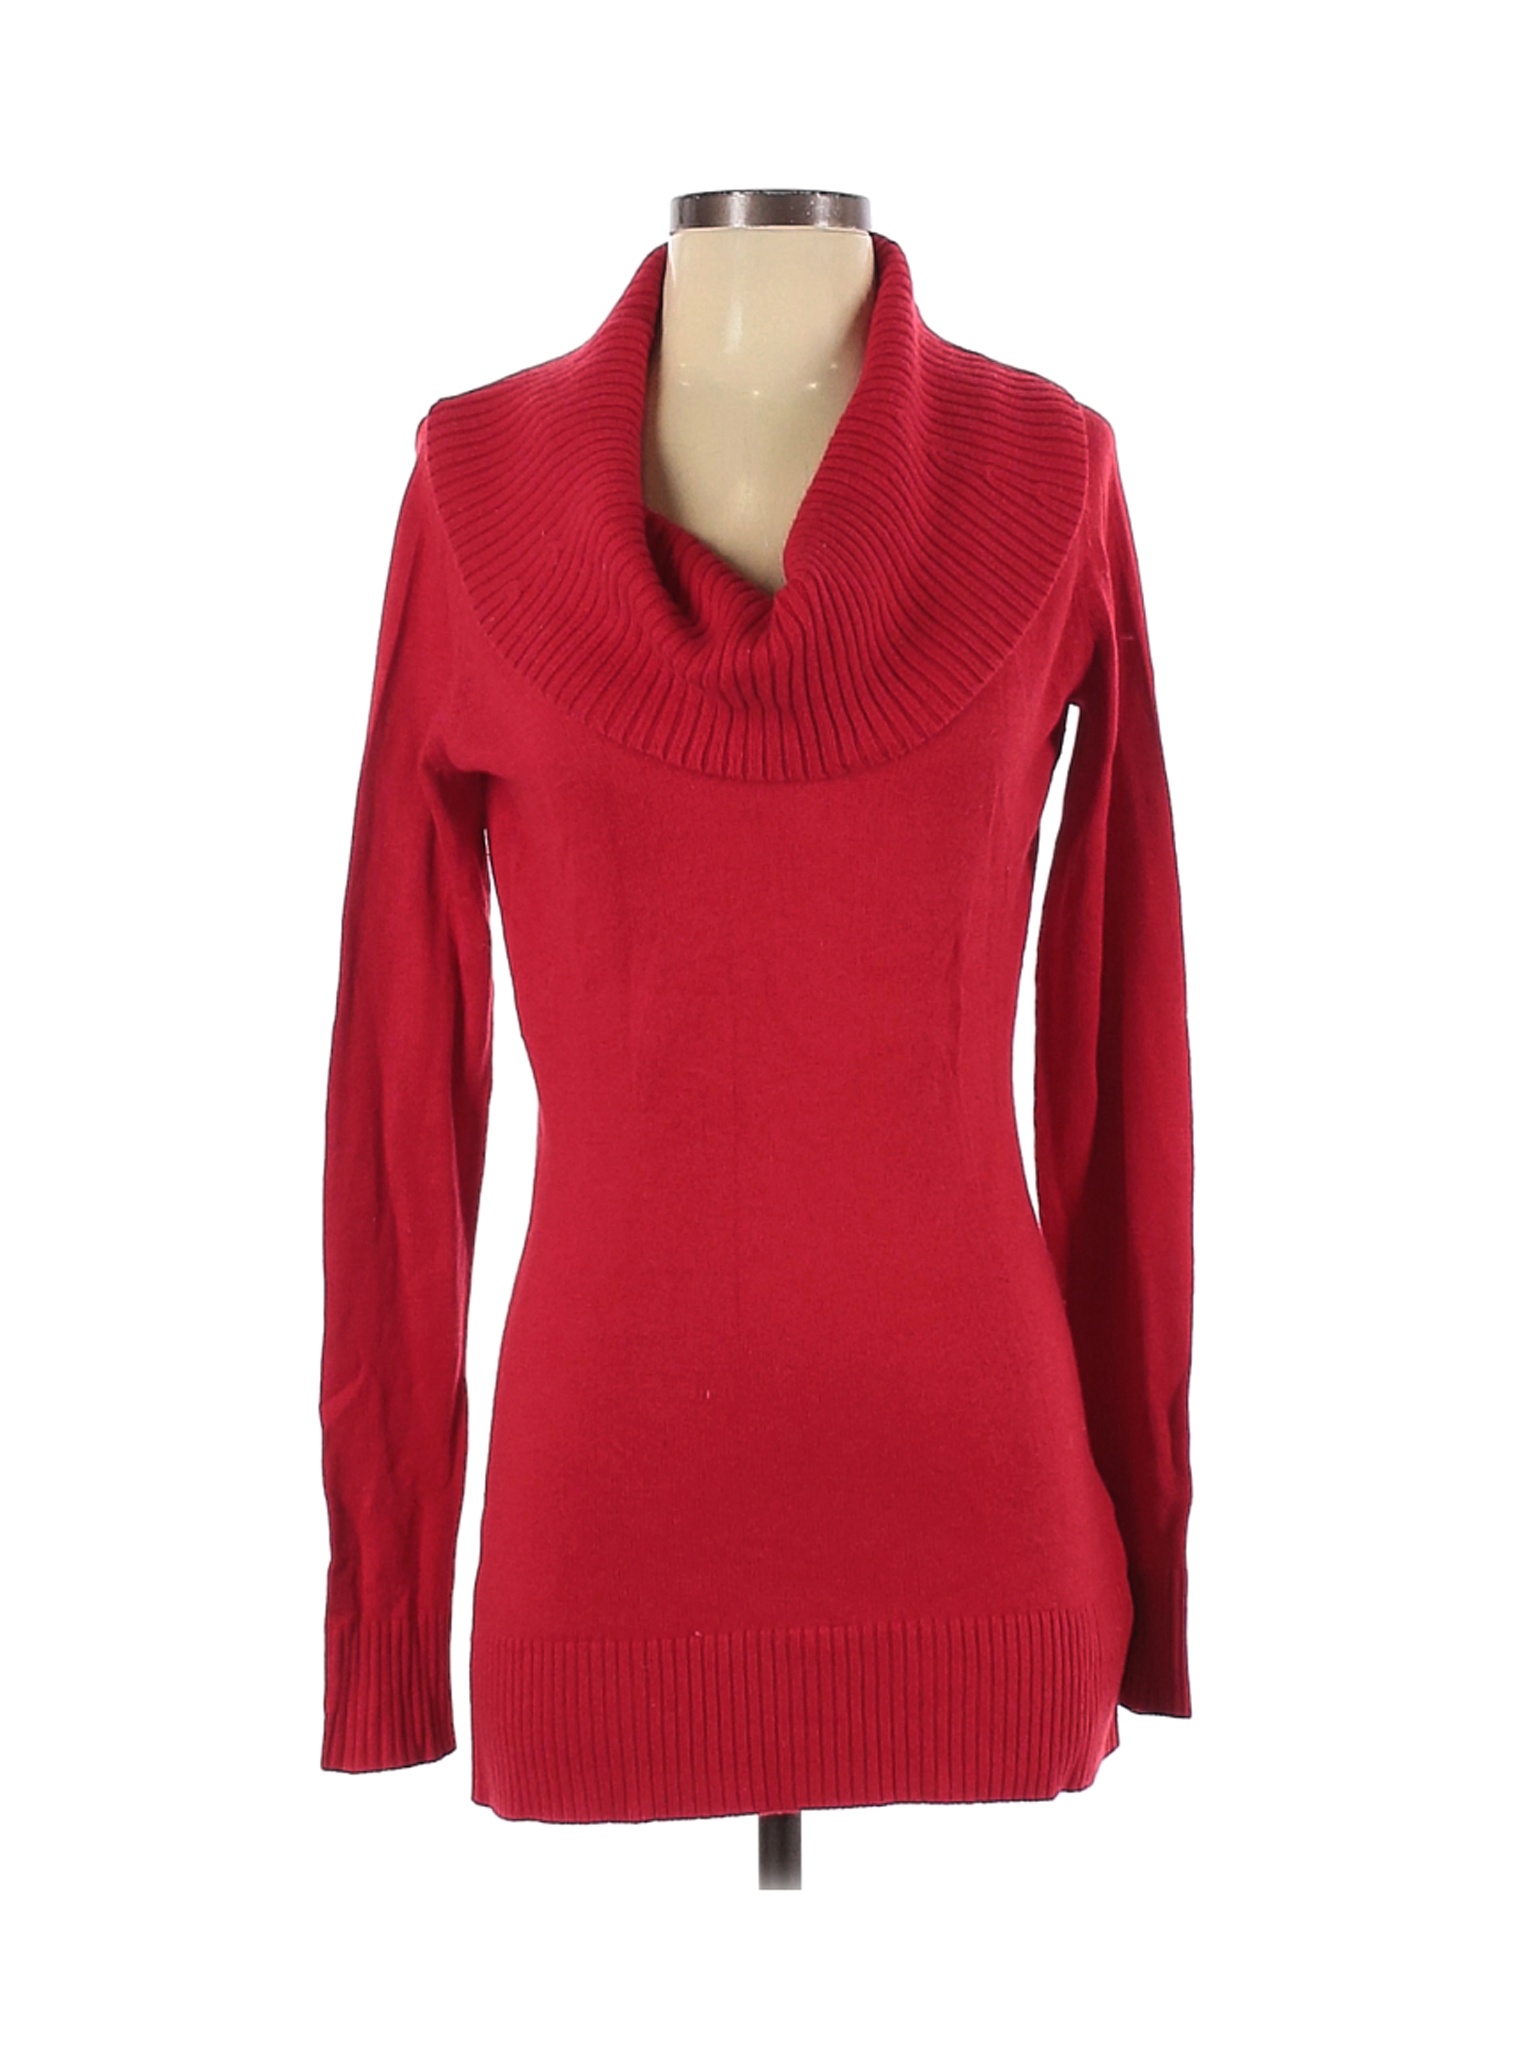 Banana Republic Women Red Pullover Sweater S | eBay